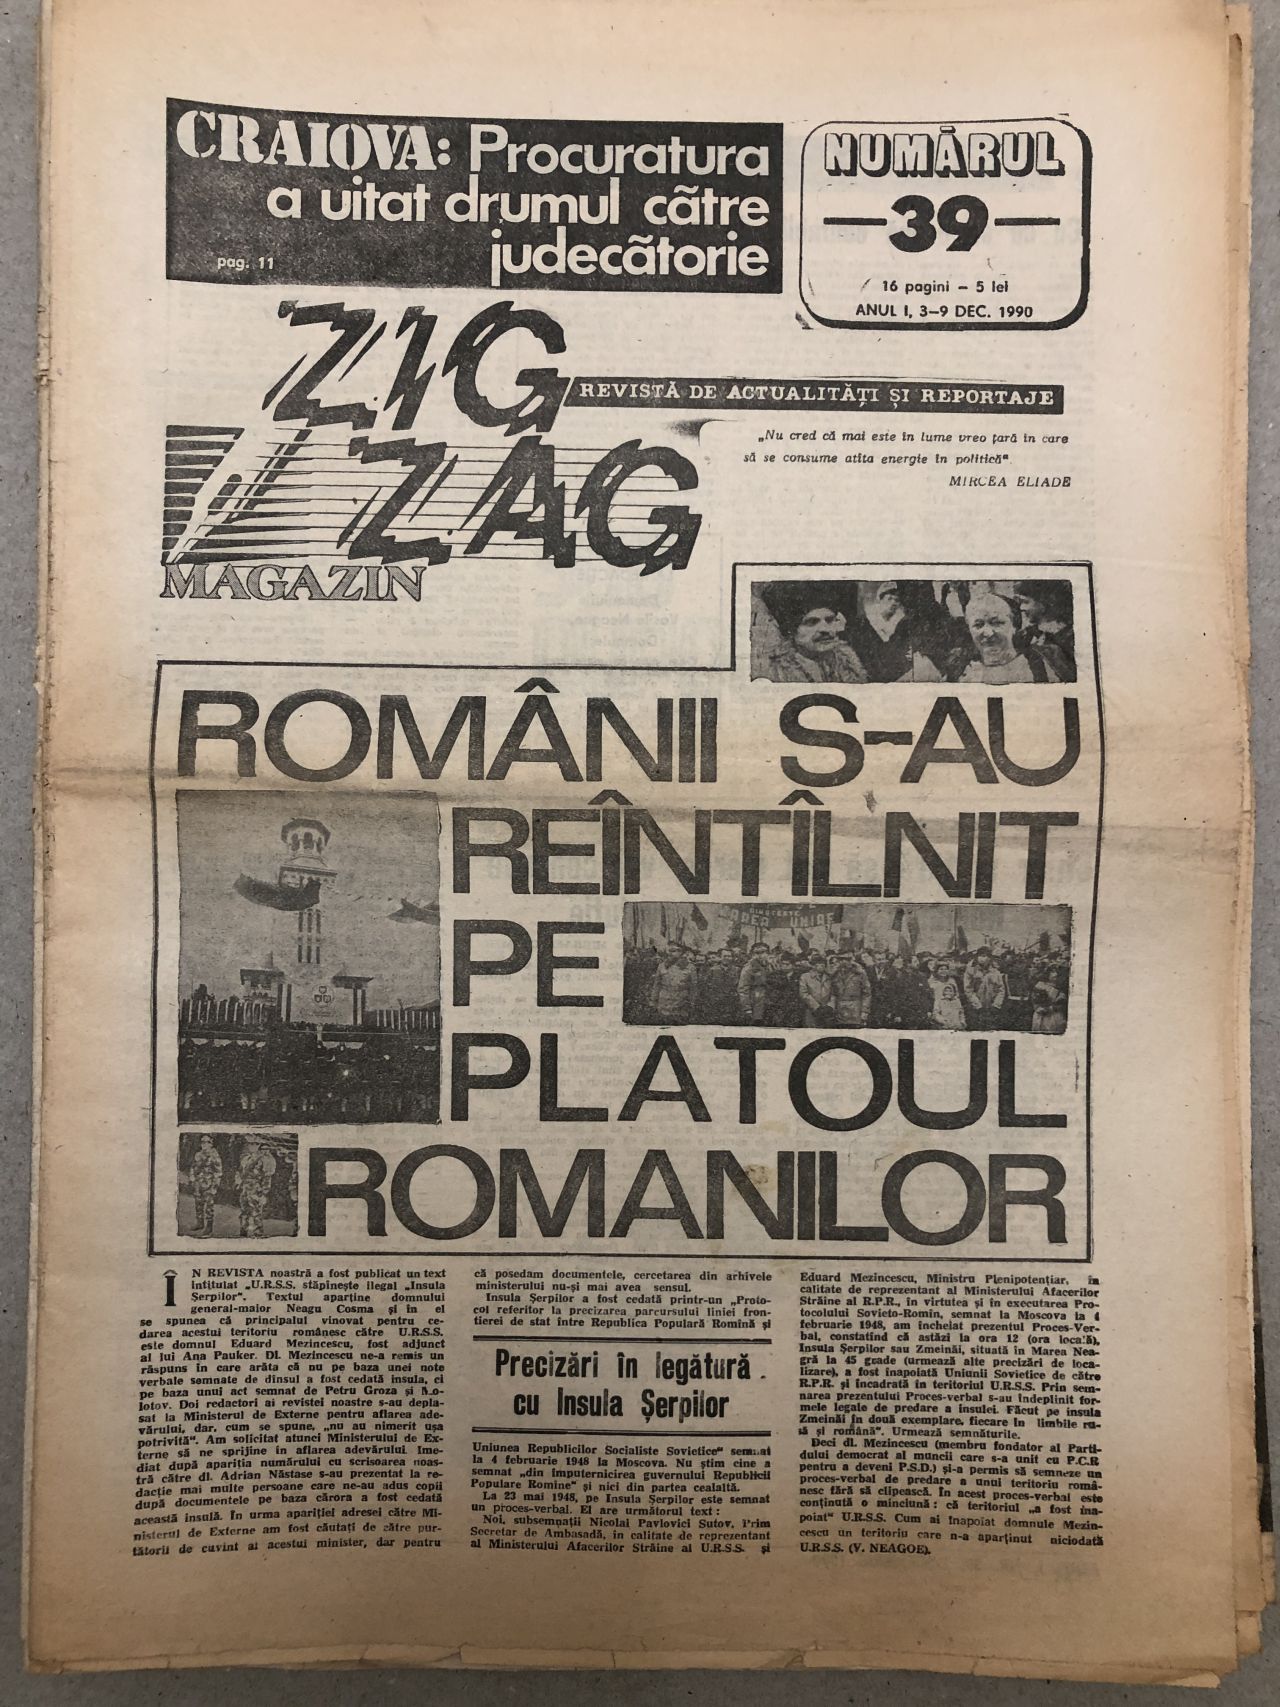 So-called preferable Vice Zig Zag Magazin, ziar vechi 3 decembrie 1990 – kolectionarul.ro